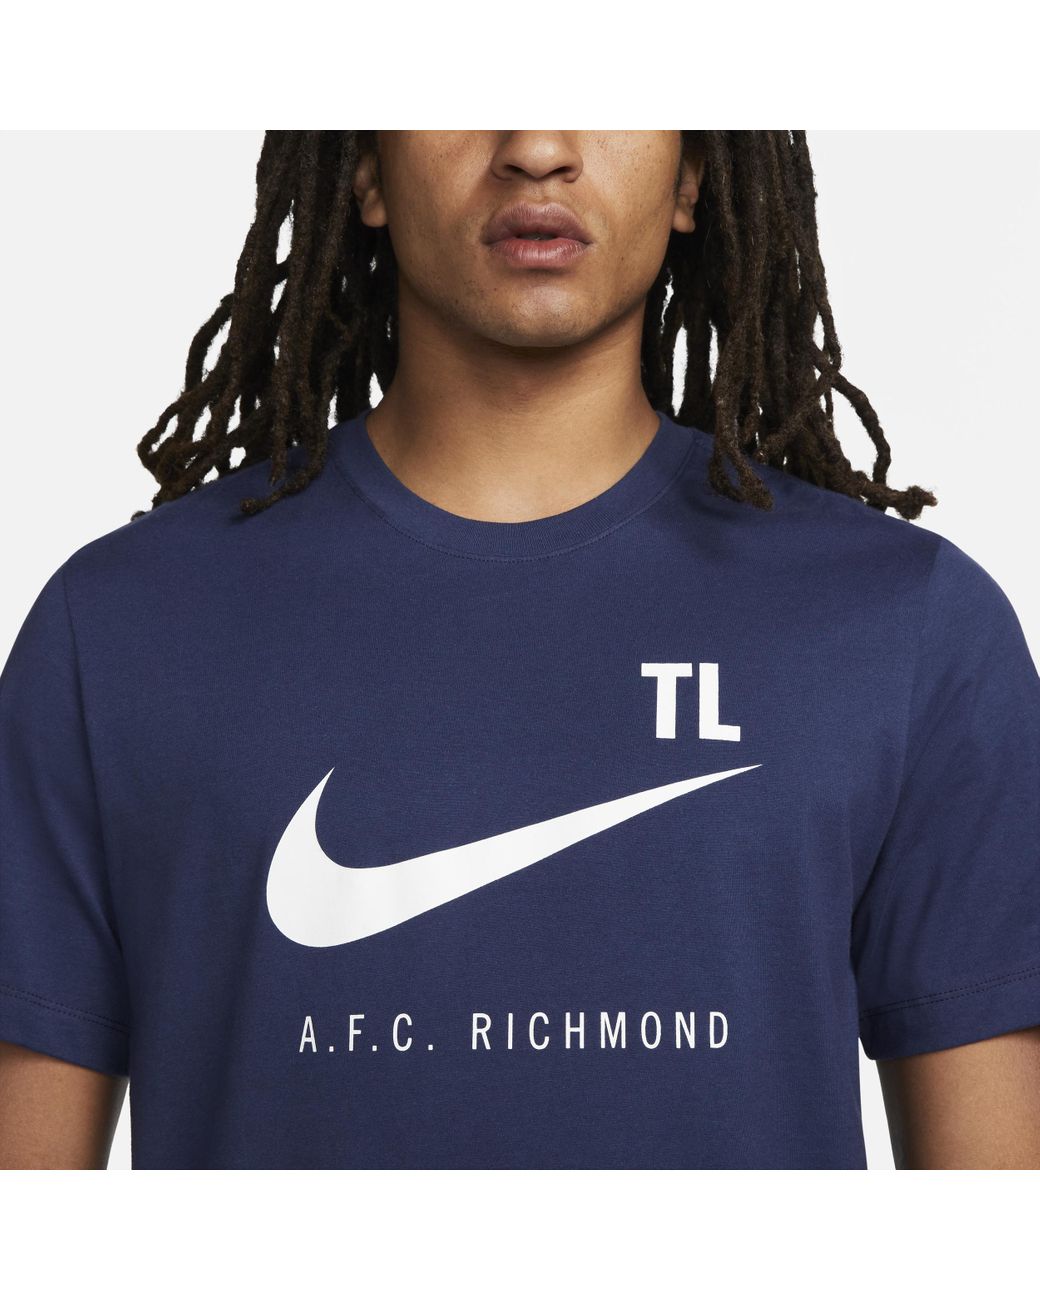 Richmond Blue Devils T-Shirt